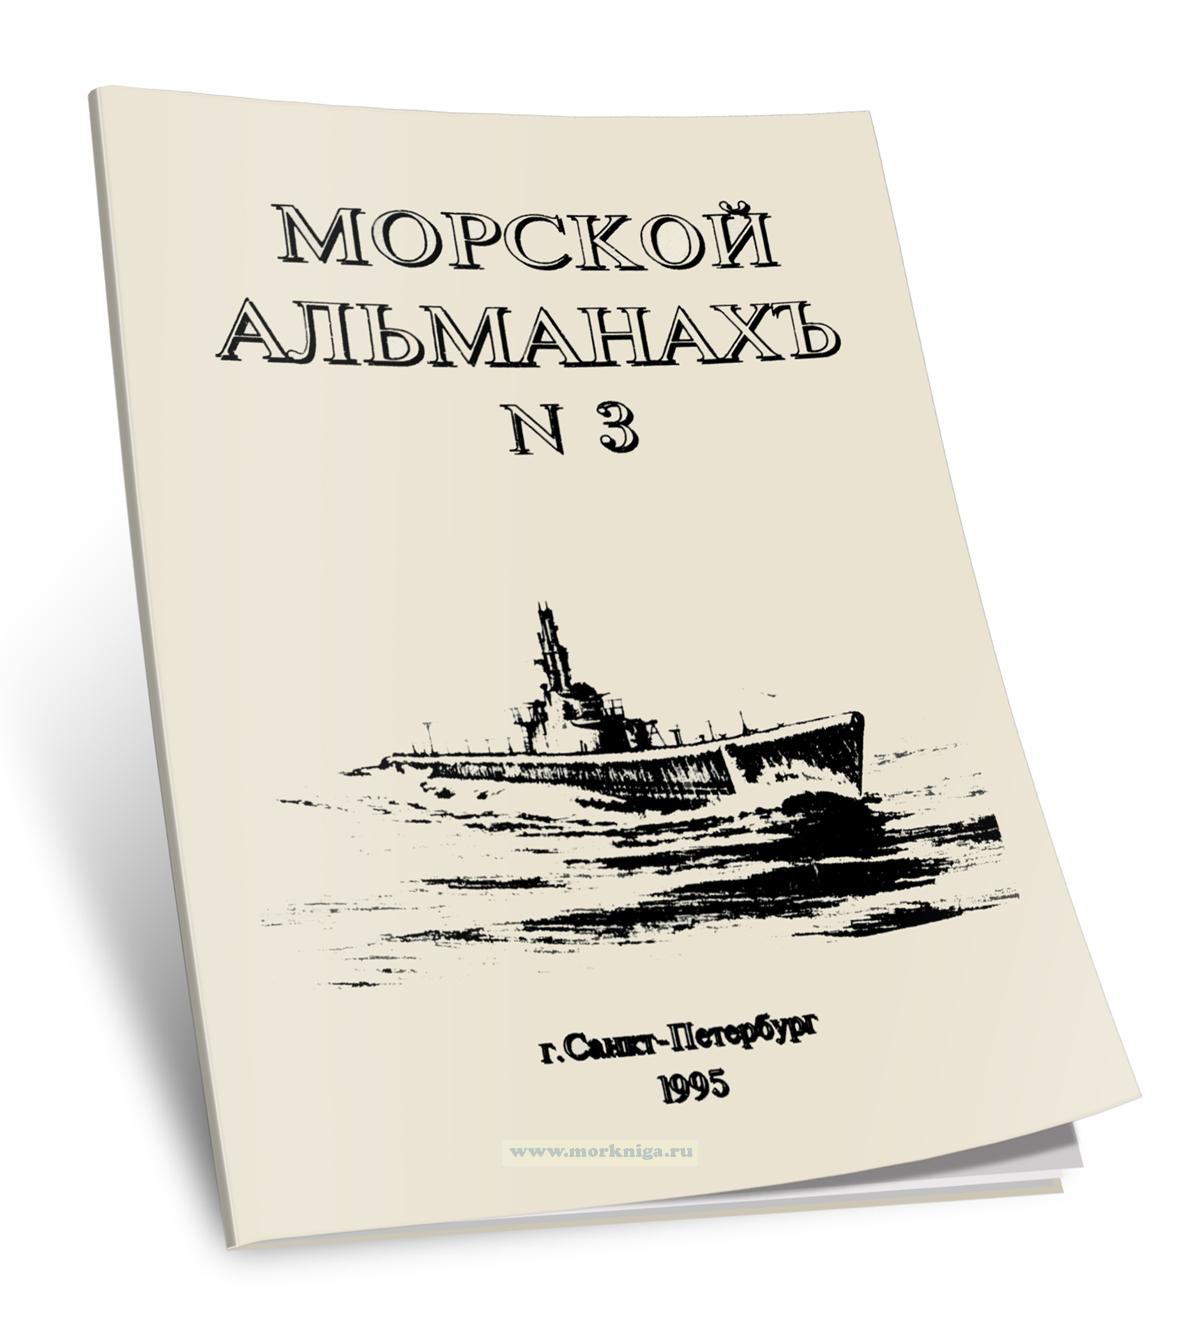 Морской альманахъ № 3 1995